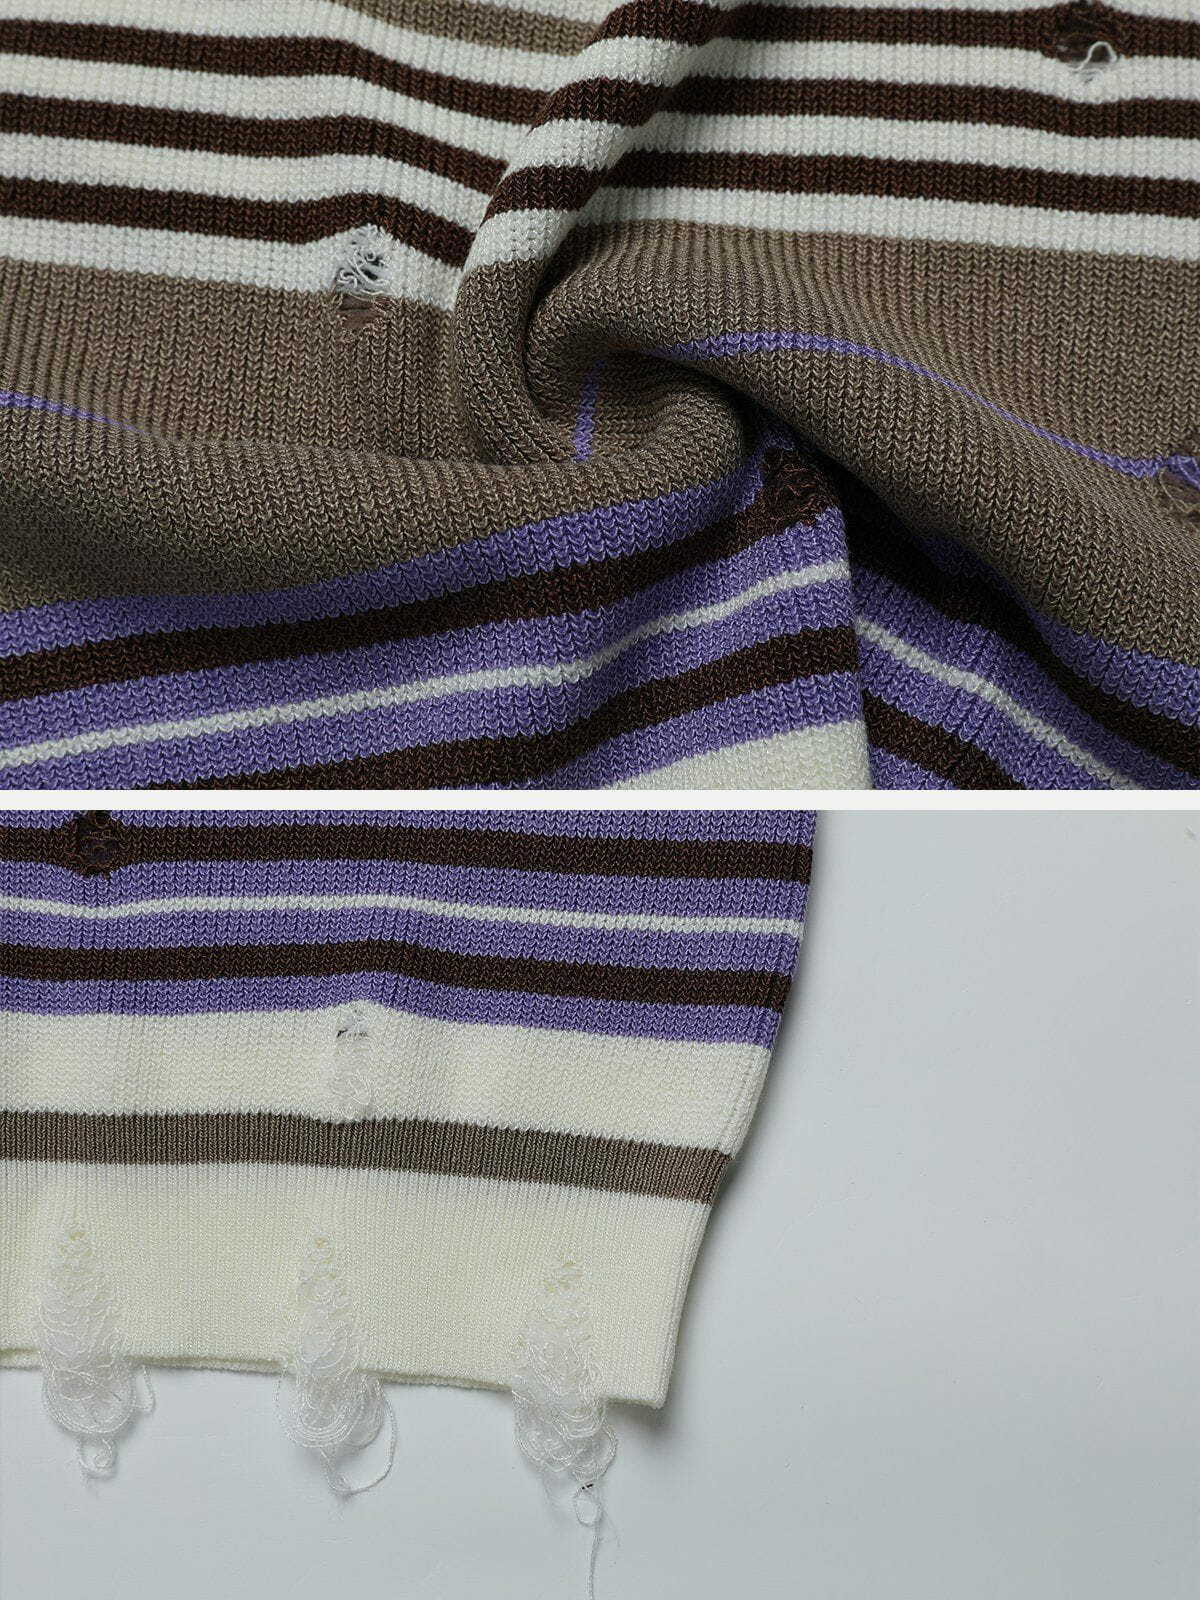 revolutionary striped knit tee edgy y2k streetwear 3328